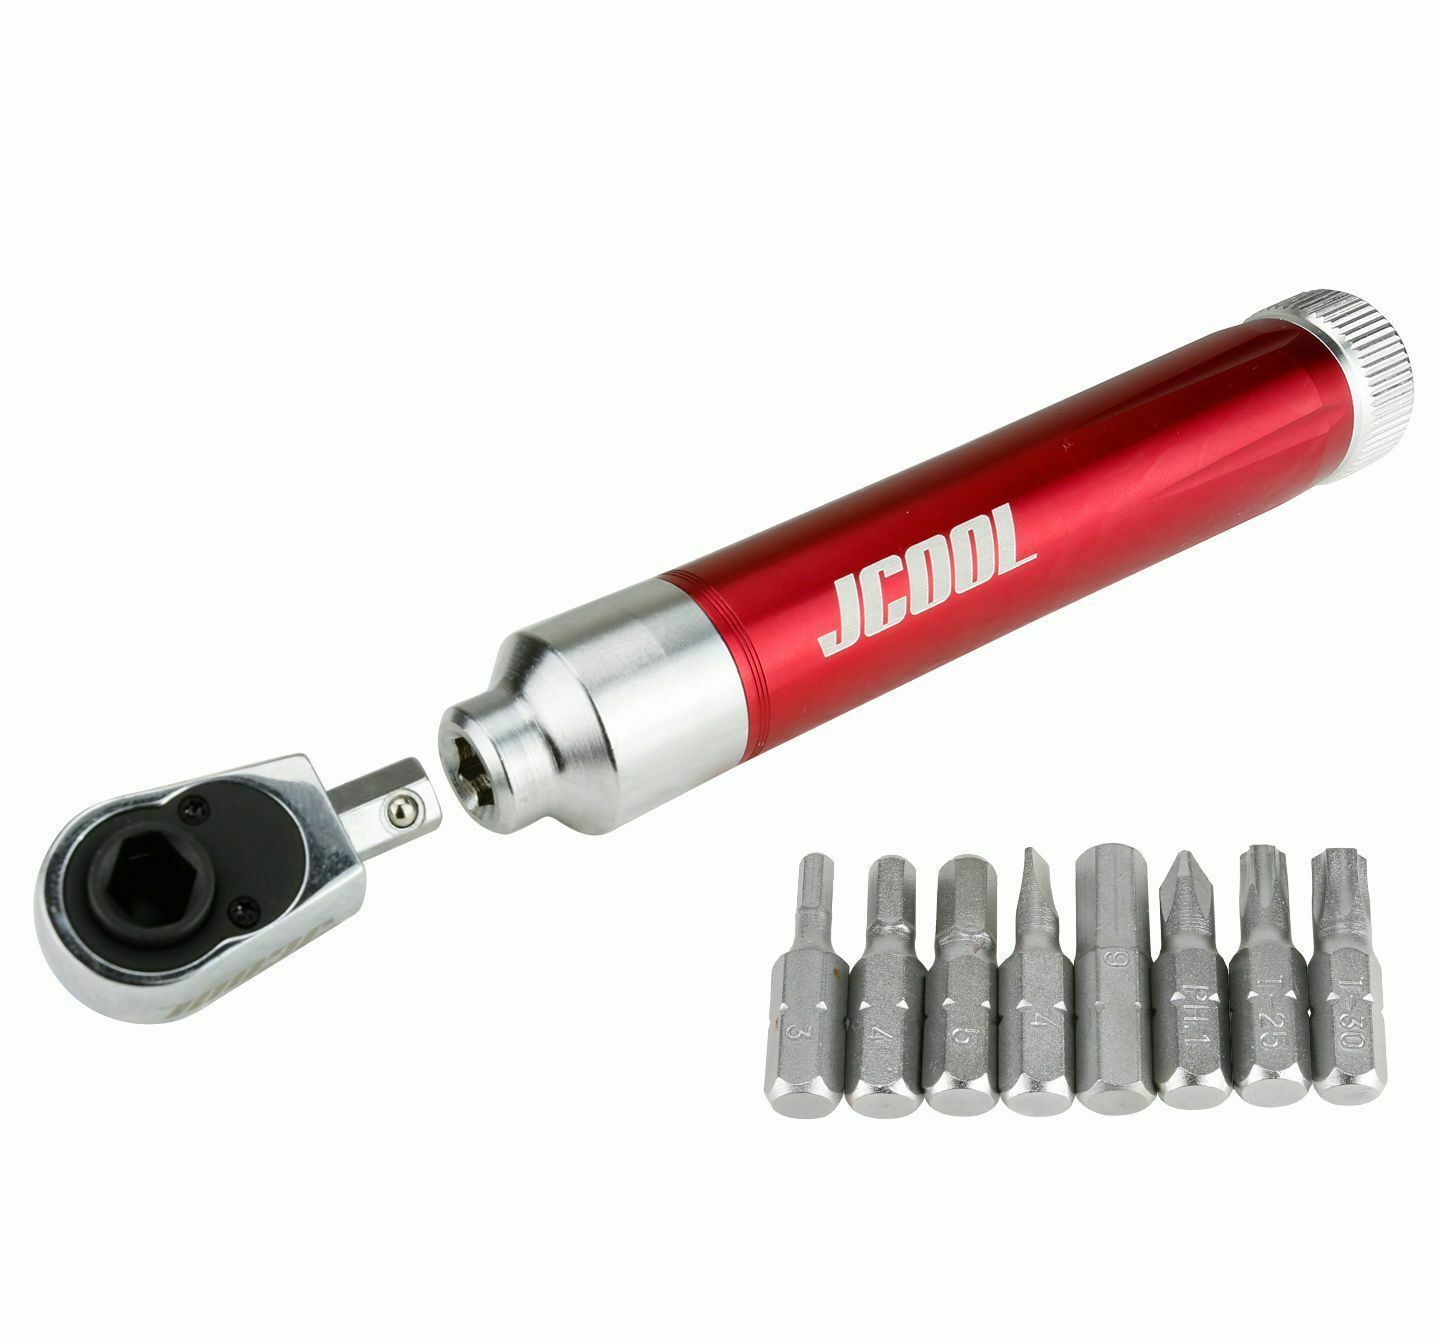 JCOOL JC-2358 LS Road Mountain Bicycle Bike Ratchet Wrench Tool Light Kit Red 